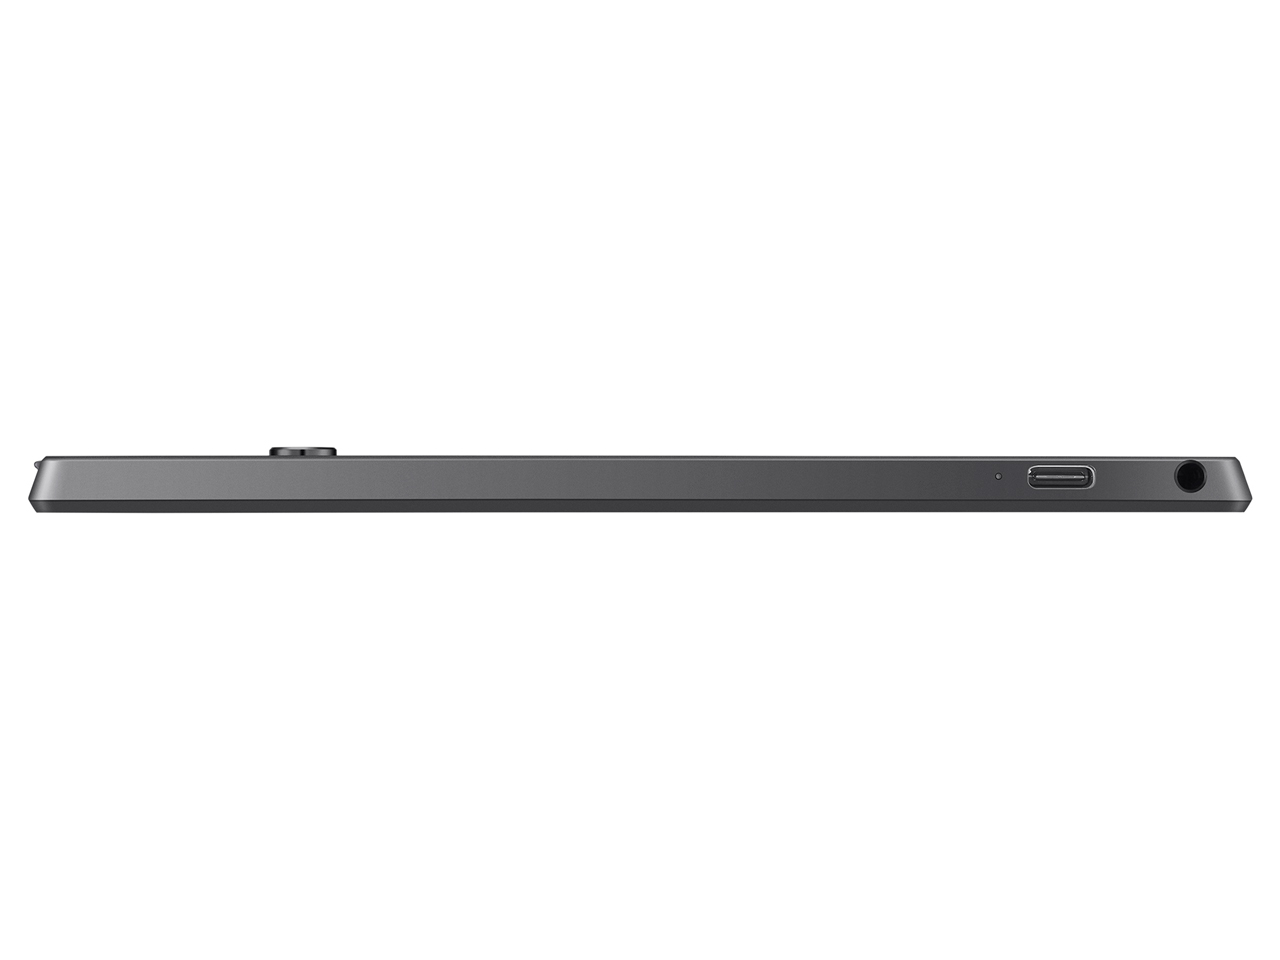 『本体 右側面』 Chromebook Detachable CM3 CM3000DVA-HT0019 の製品画像